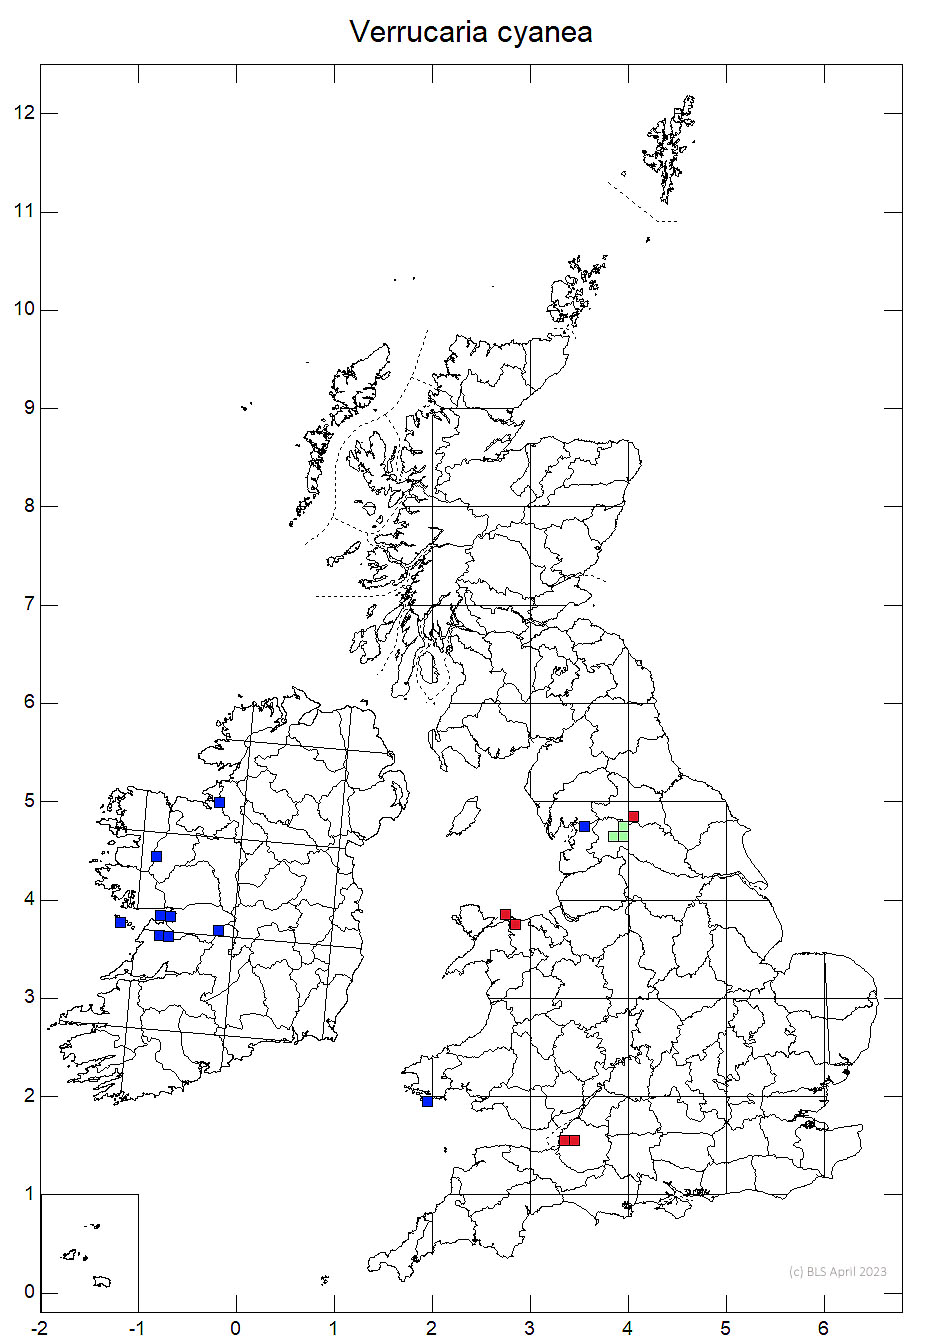 Verrucaria cyanea 10km sq distribution map